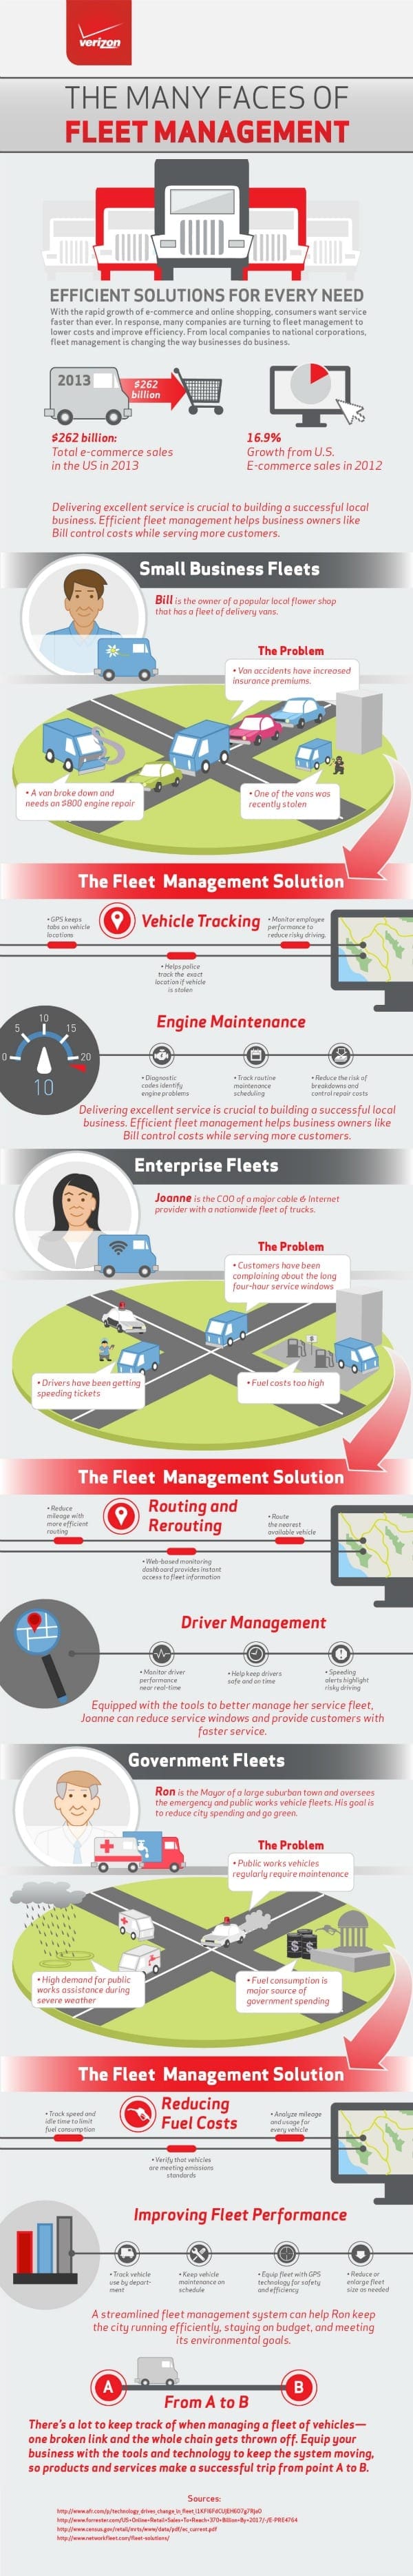 How Fleet Management Software Works - Infographic